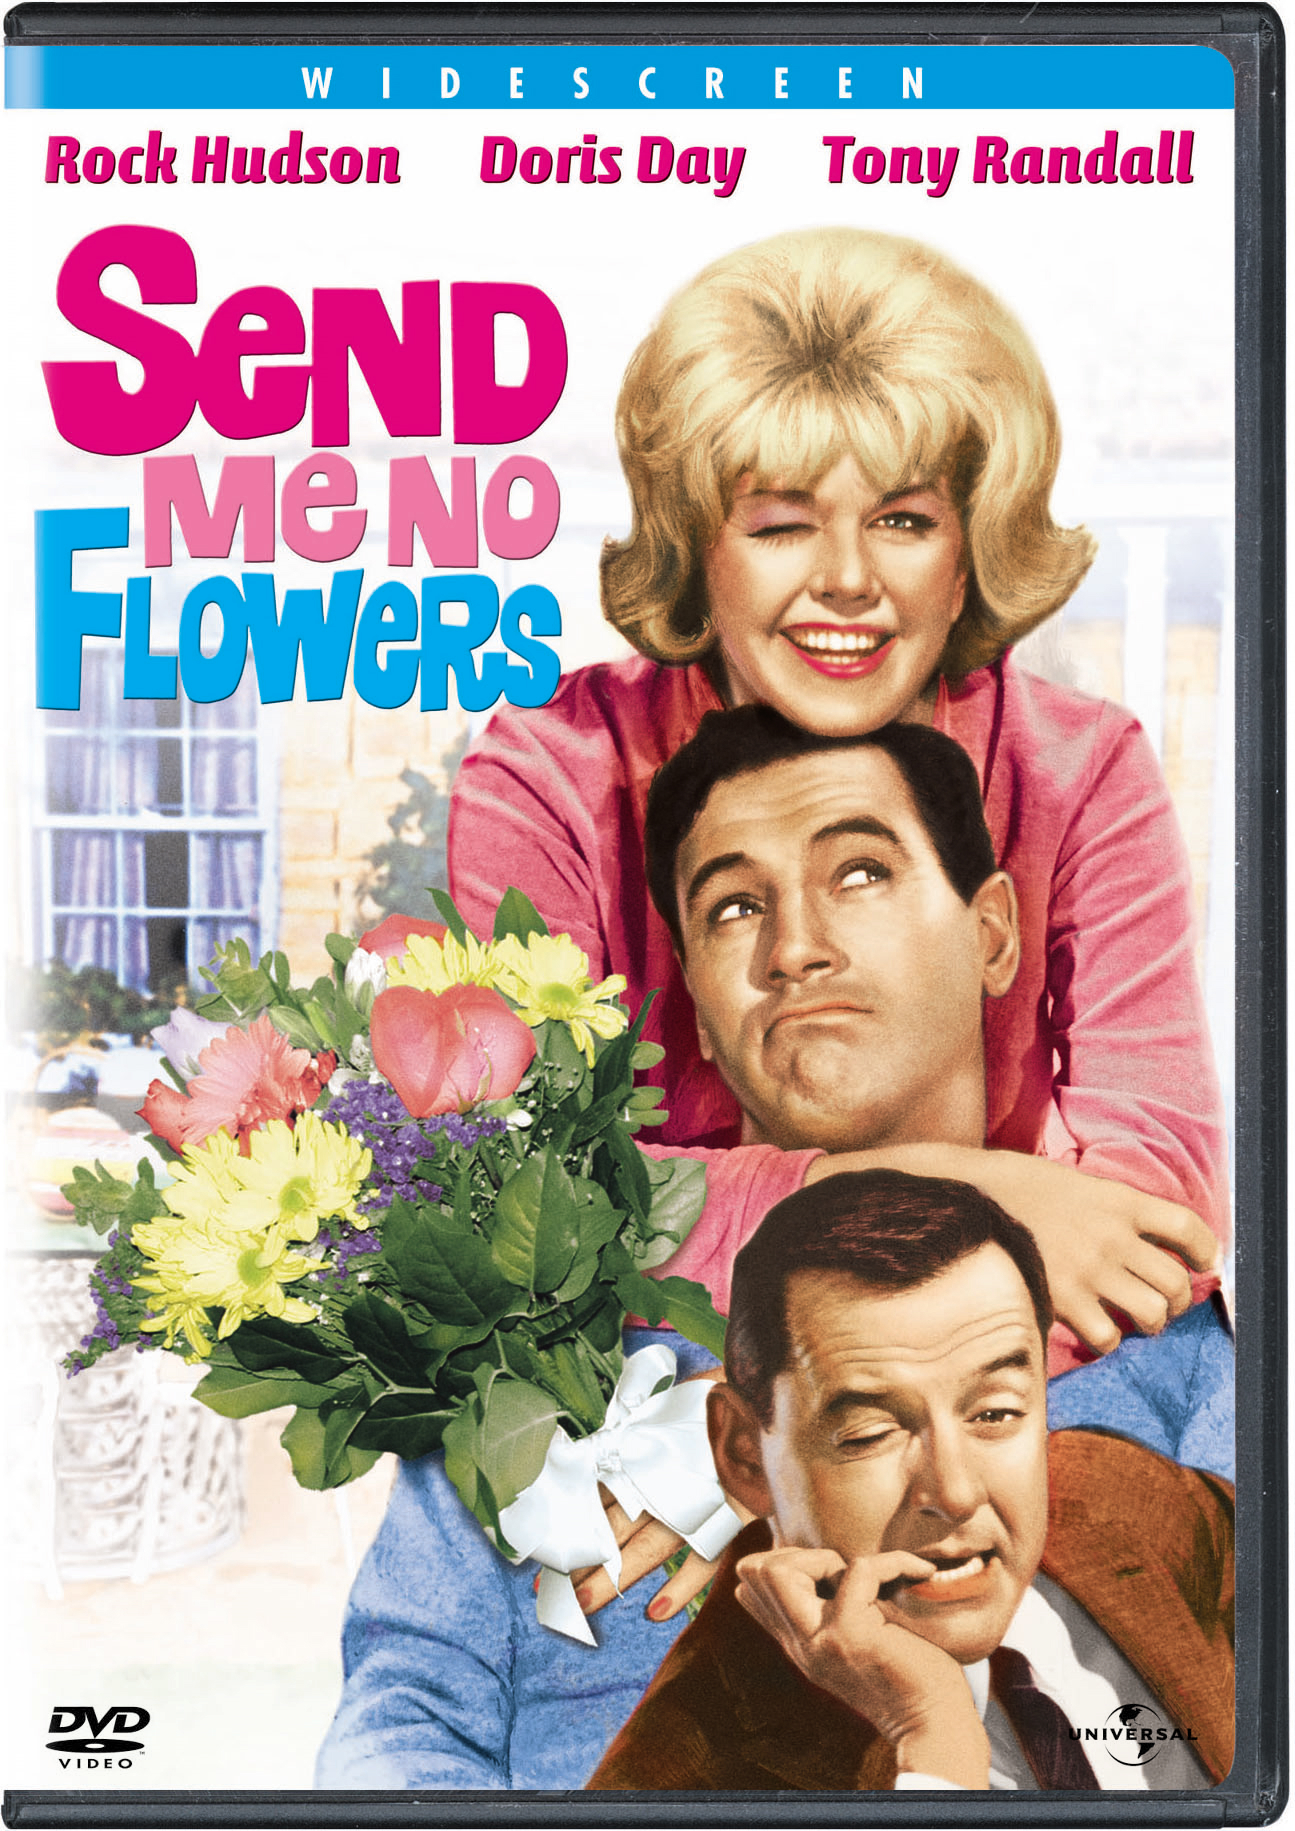 Send Me No Flowers - DVD [ 1964 ]  - Modern Classic Movies On DVD - Movies On GRUV